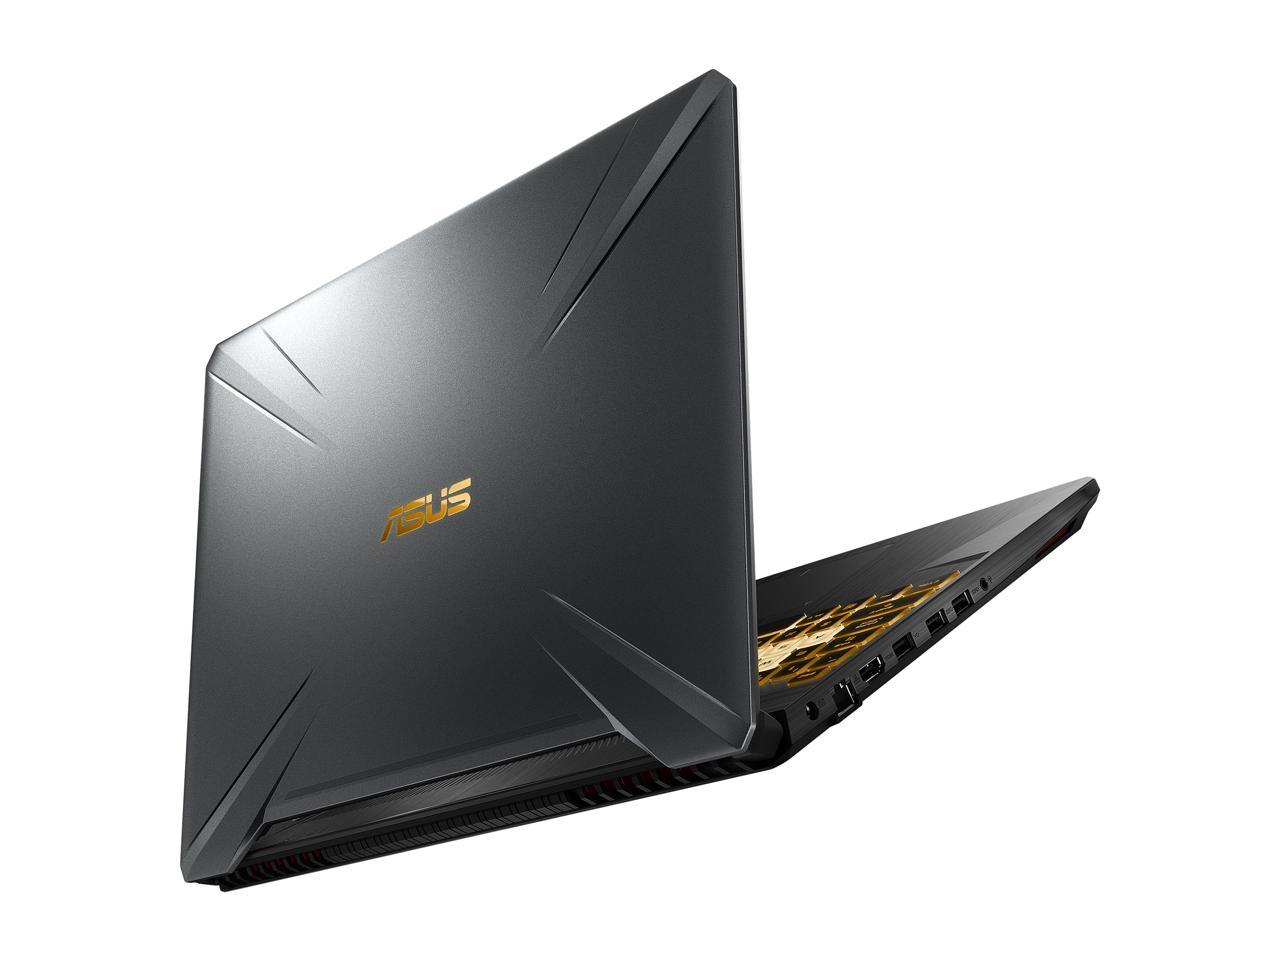 ASUS - Gaming Laptop - 15.6" 120 Hz IPS-type - AMD Ryzen 7 3750H (up to 4.0 GHz) - NVIDIA GeForce GTX 1660 Ti - 16 GB RAM - 256 GB SSD - 1 TB HDD - Windows 10 Home - TUF (TUF505DU-EB74)